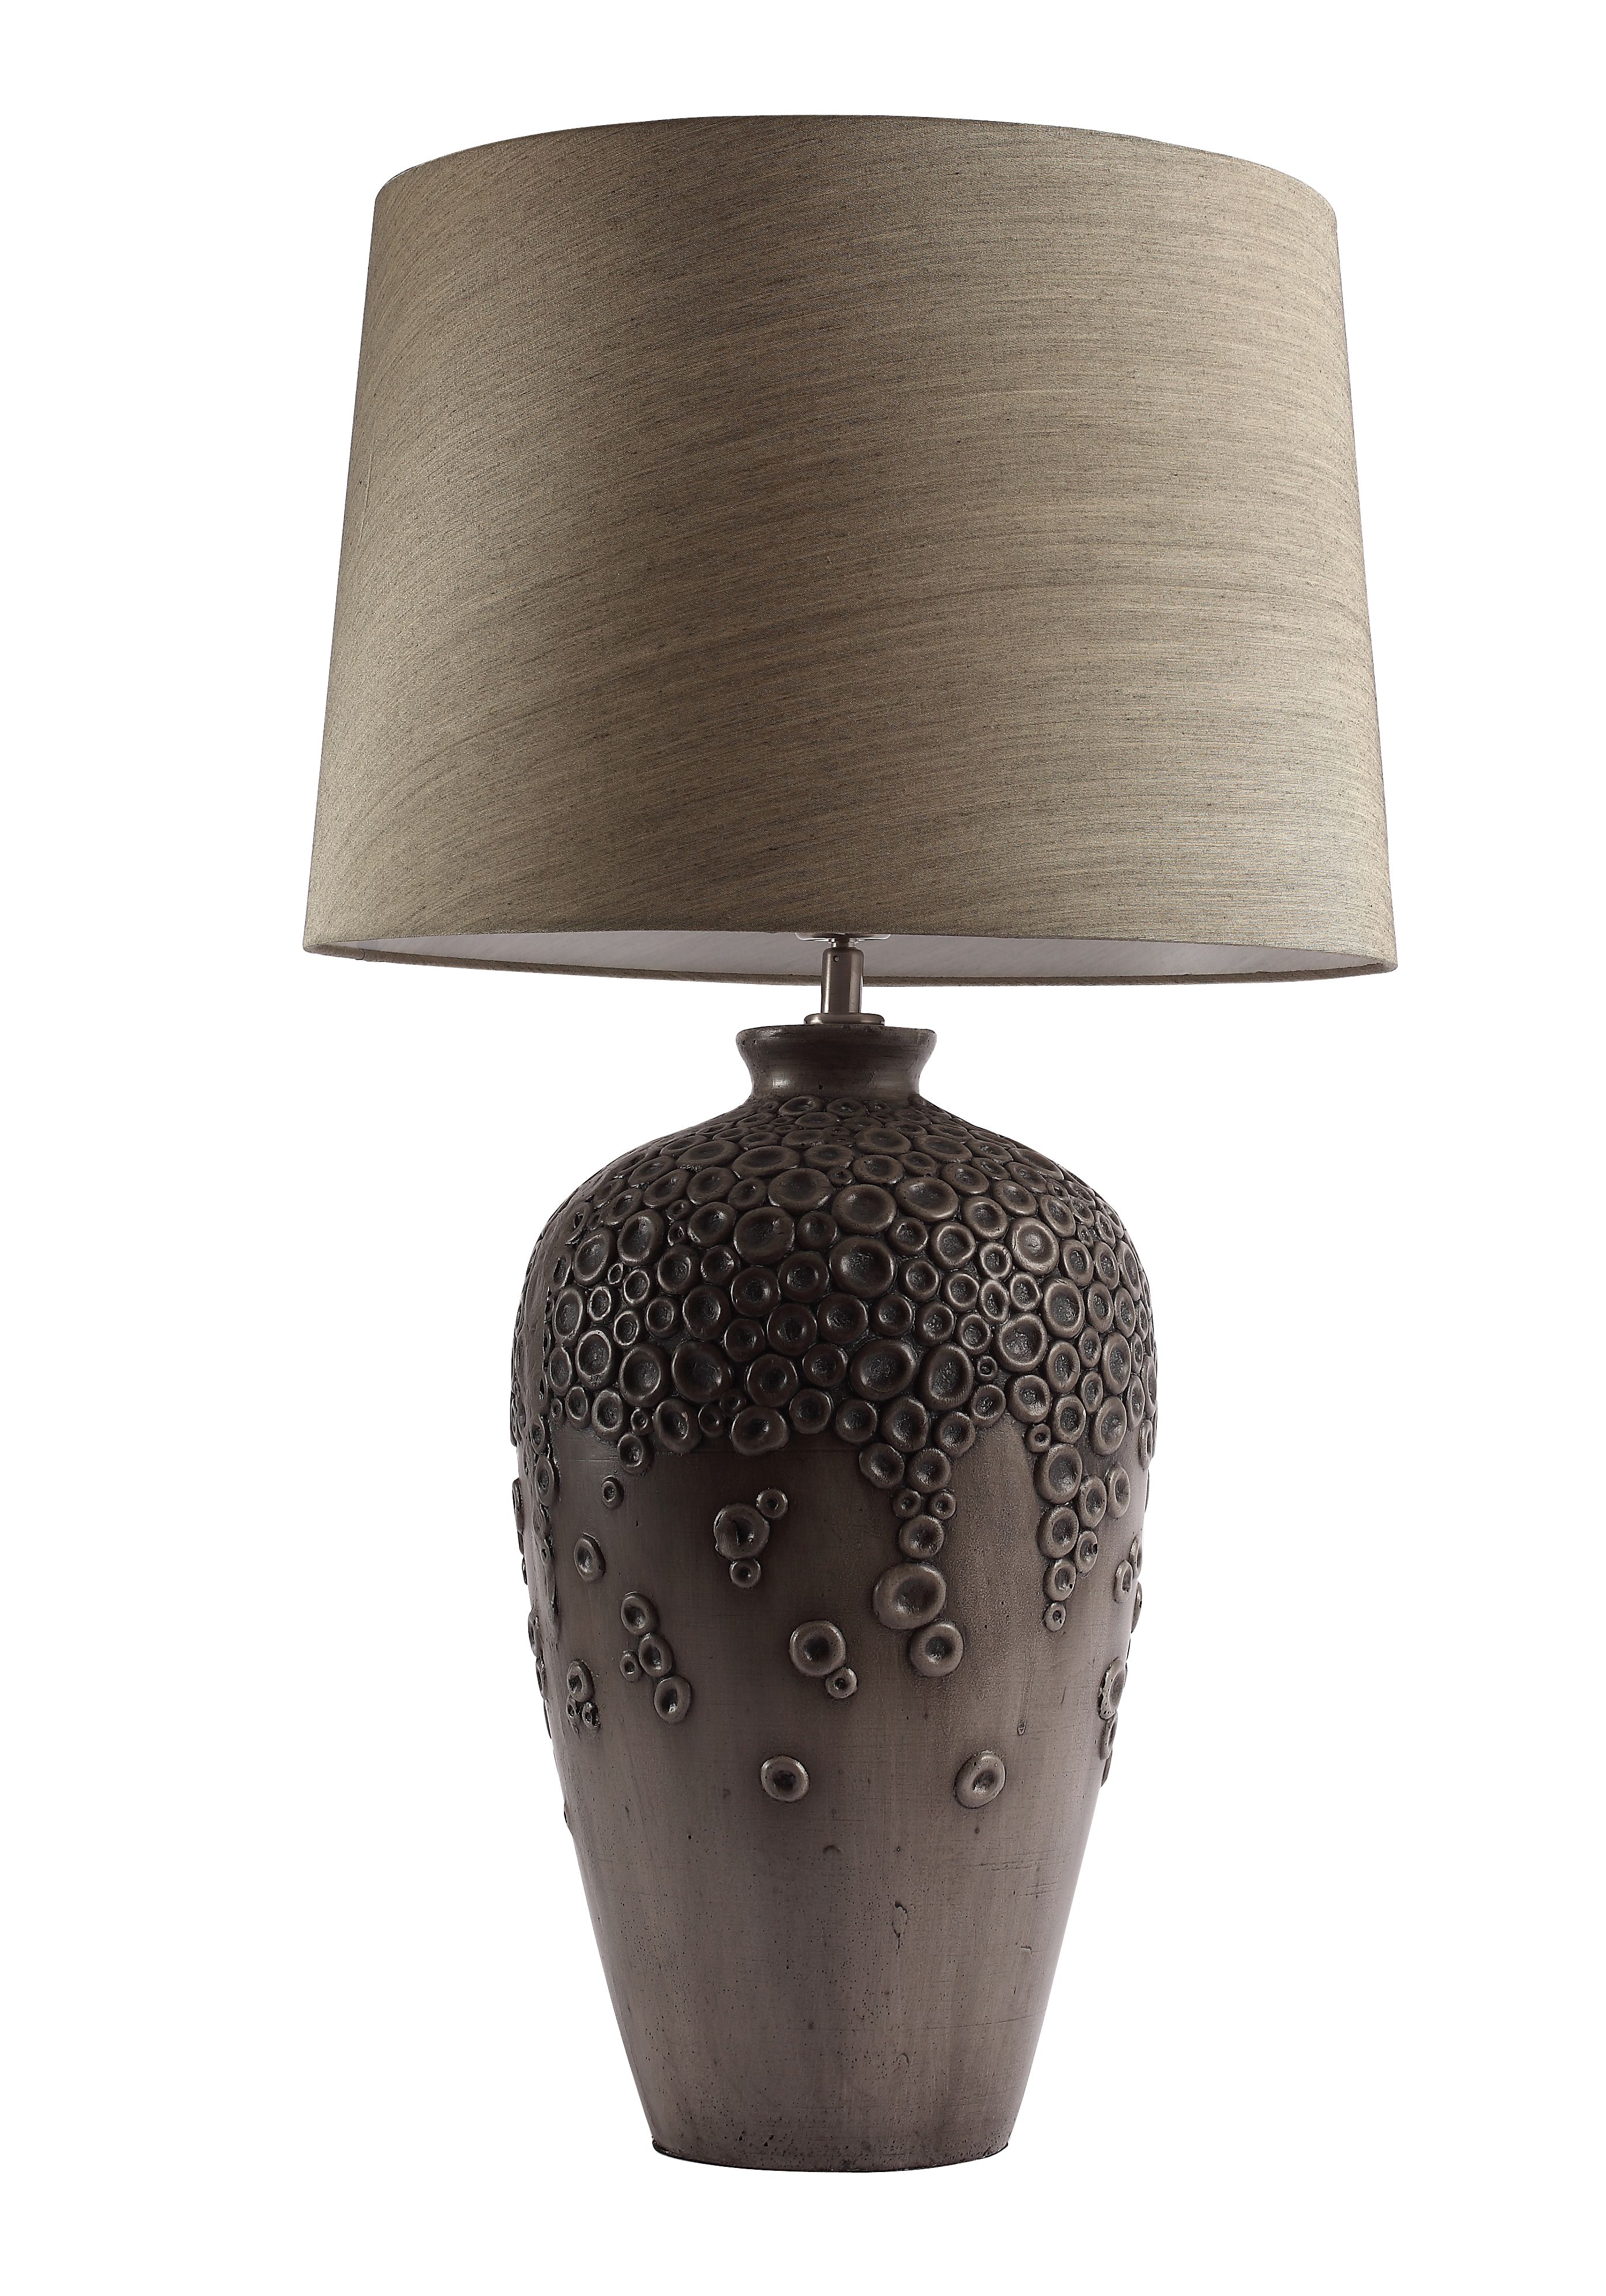 SL987.604.01 — Настольная лампа ST Luce Tabella, 1 плафон, коричневый с бежевым